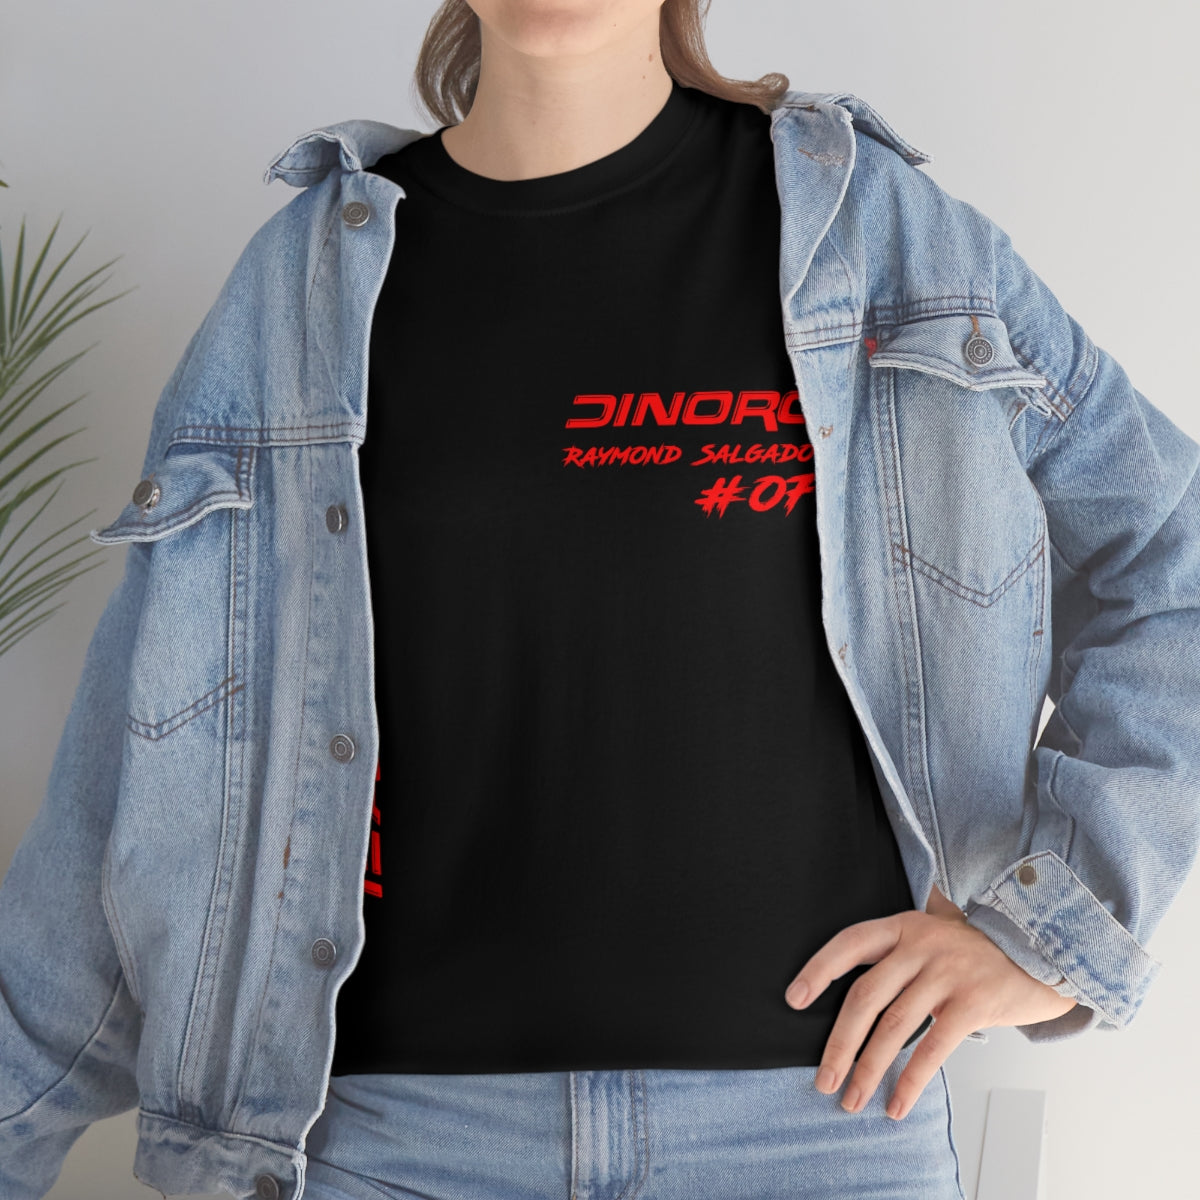 Team Driver Raymond Salgado Front and Back DinoRc Logo T-Shirt S-5x 5 colors